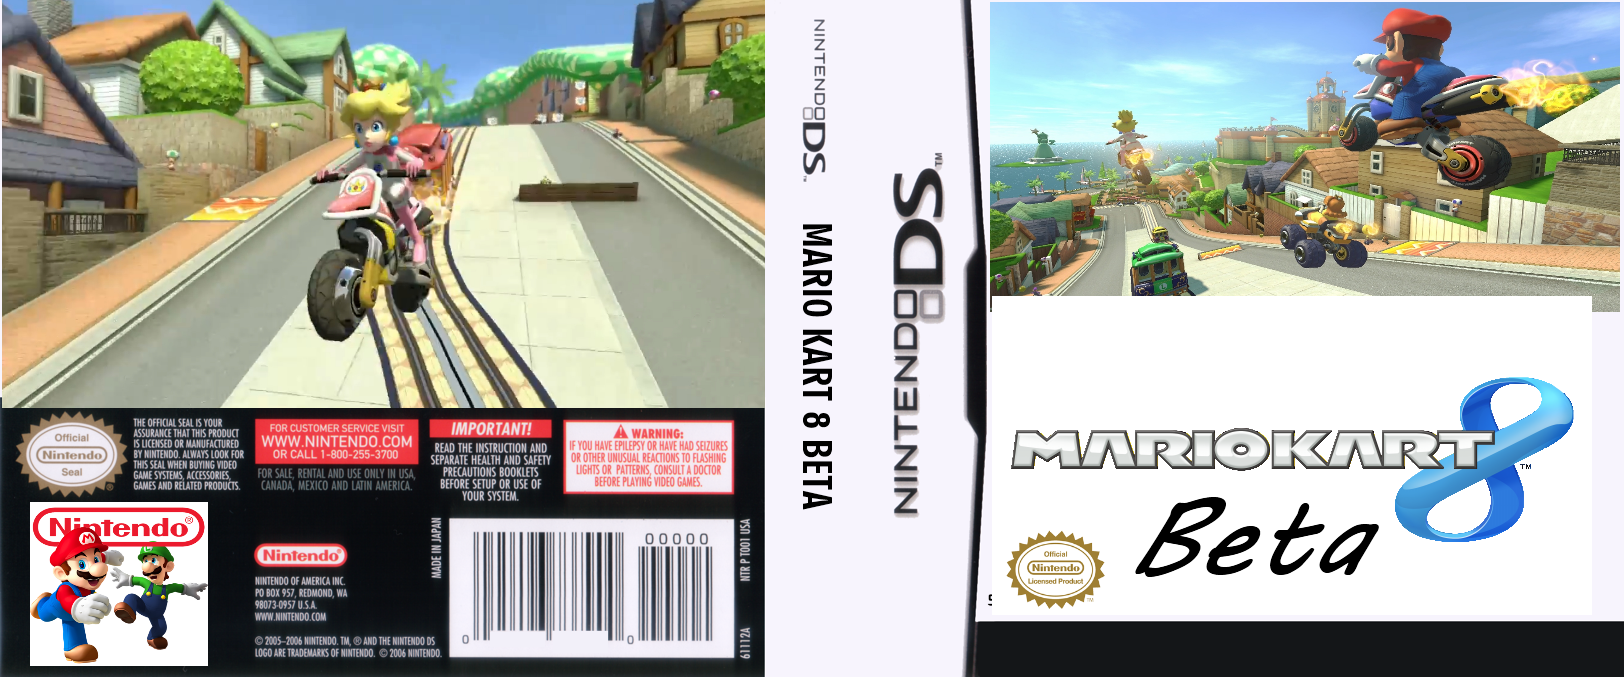 Mario Kart 8 Beta box cover